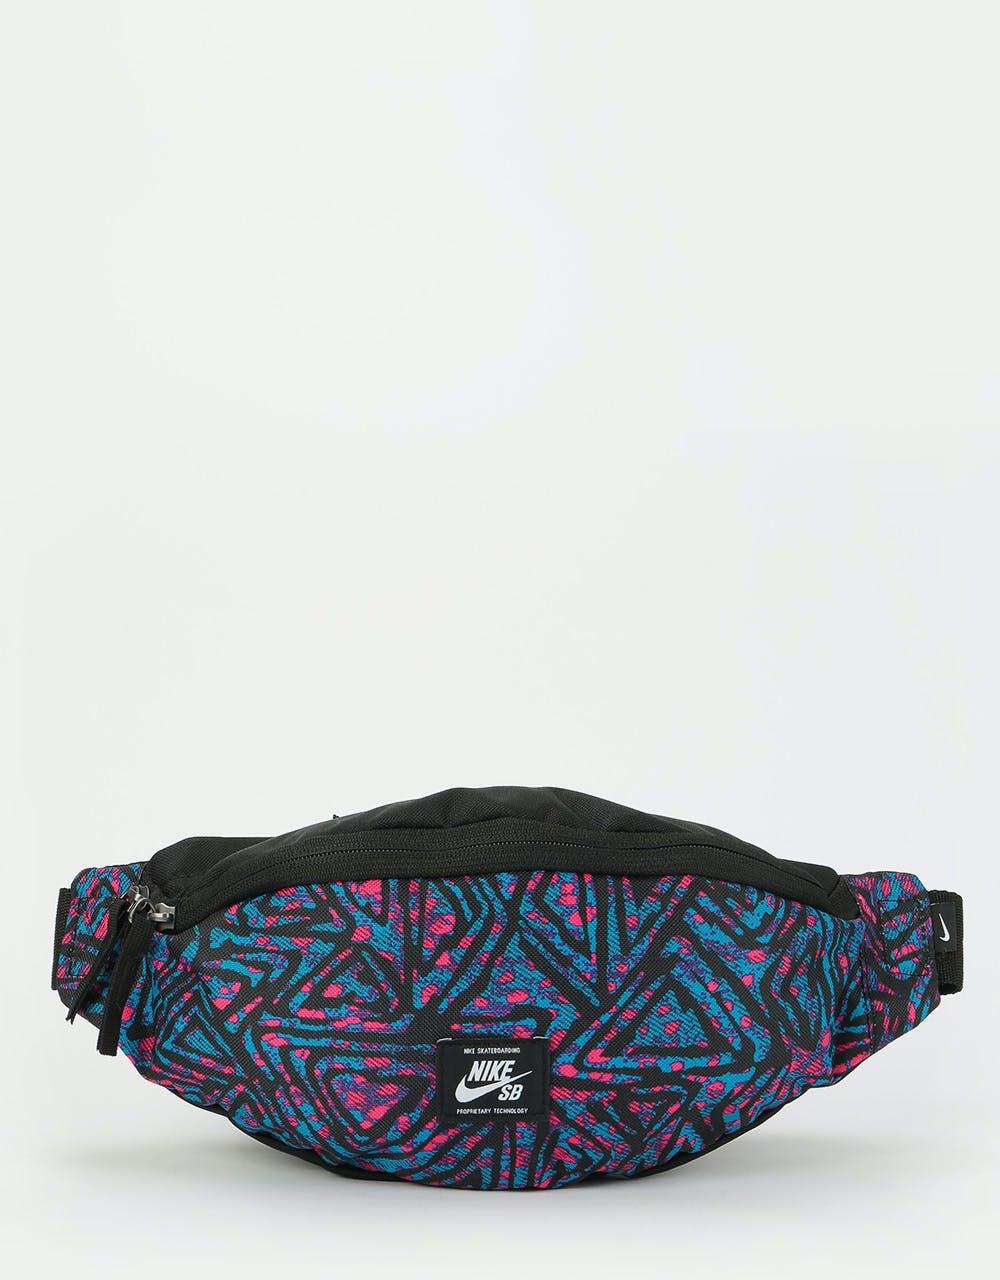 Nike SB Nike Woven Heritage Cross Body Bag - Black/Laser Blue/White